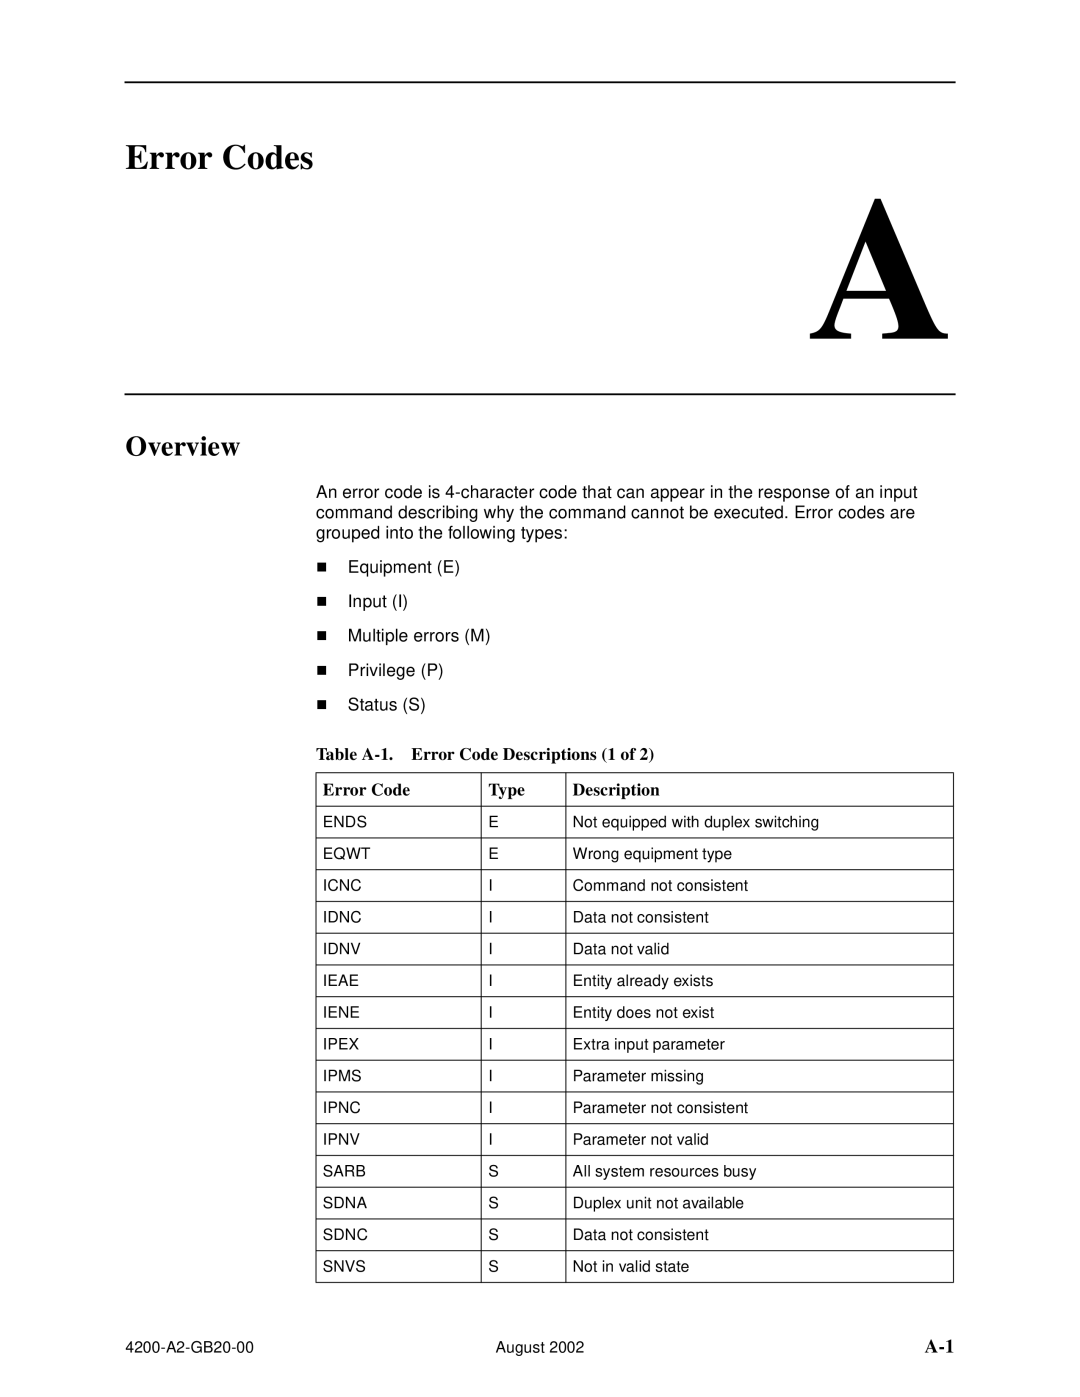 Paradyne 4200 manual Error Codes, Table A-1. Error Code Descriptions 1 of, Type, Overview 